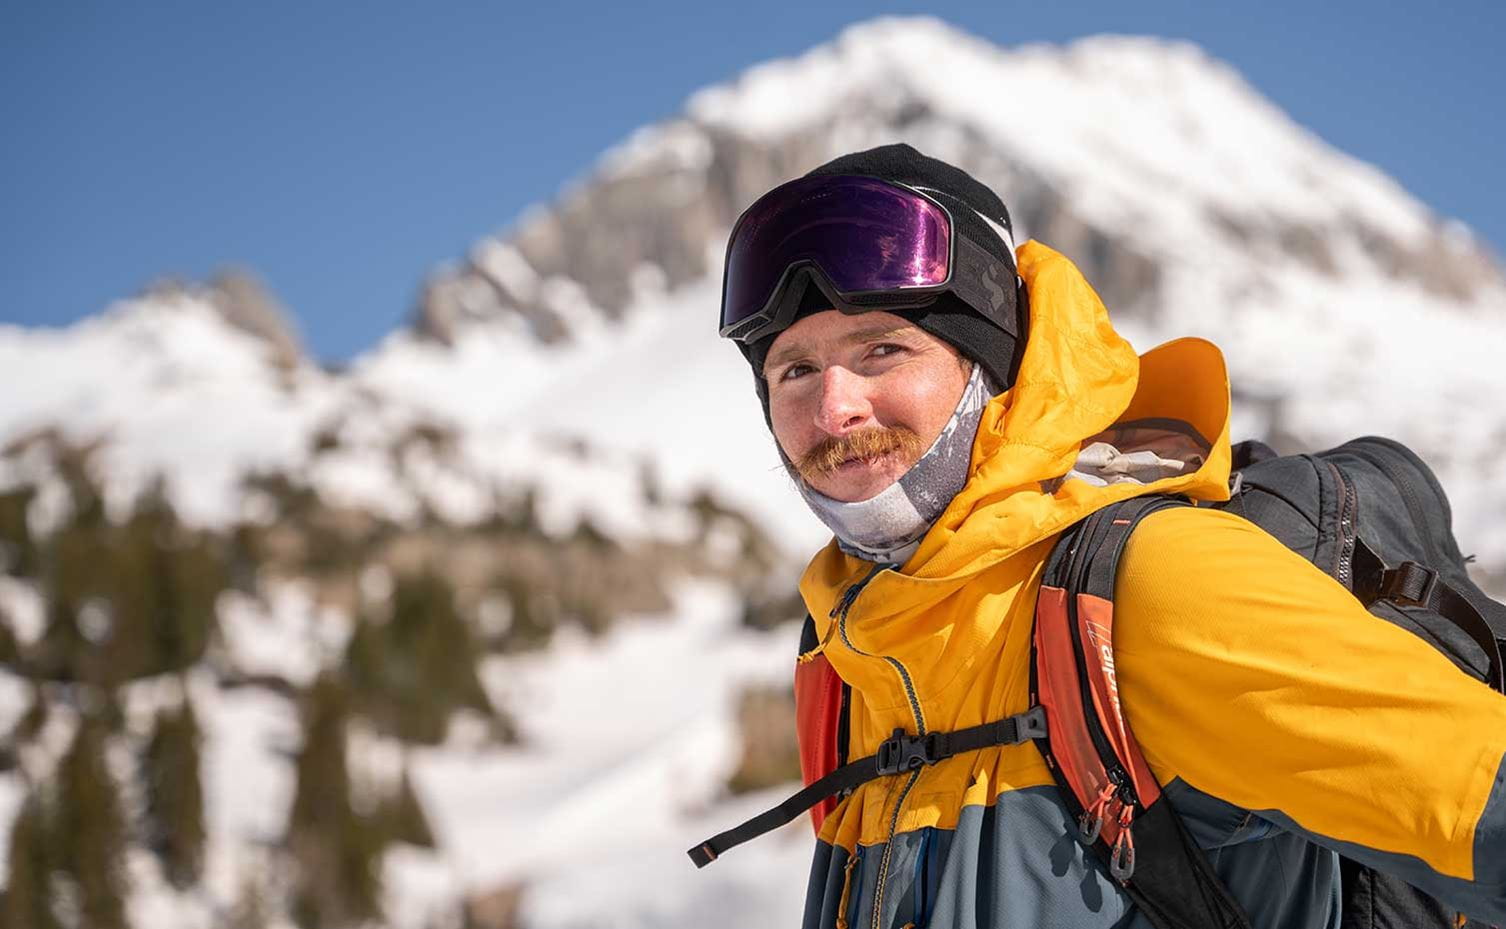 Backcountry skier Michael Wirth